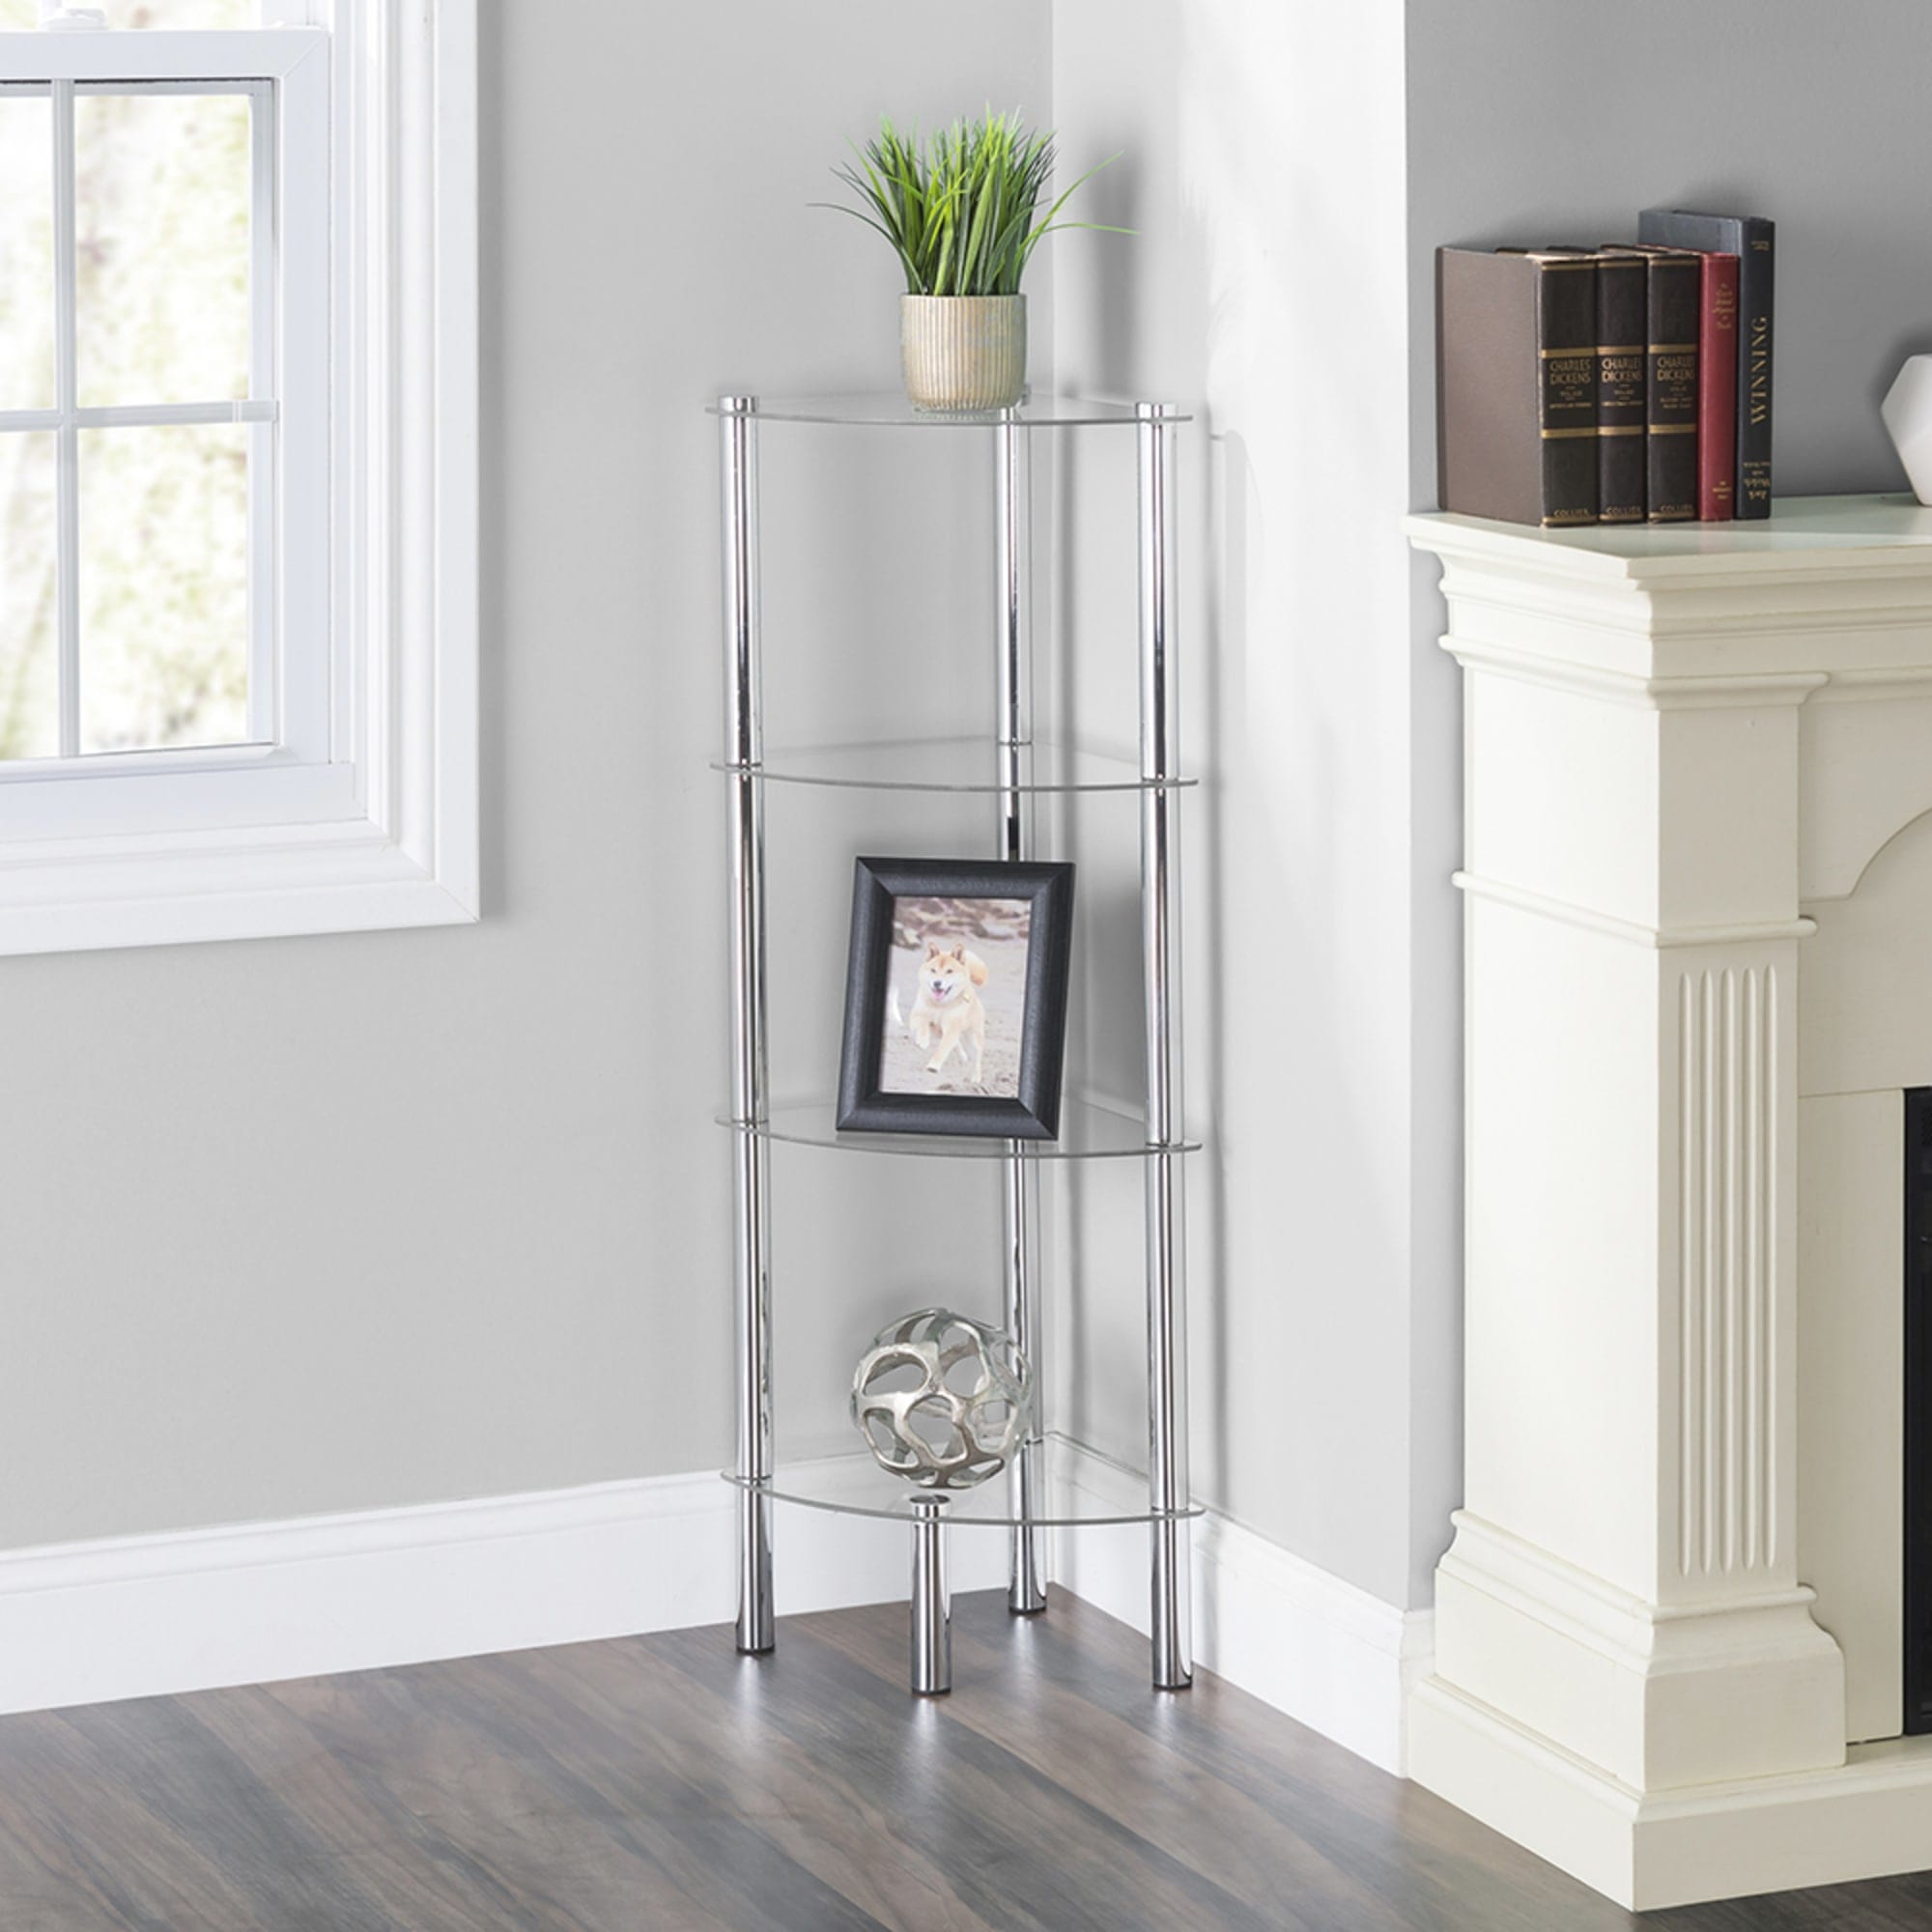 Home Basics 4 Tier Multi Use Arc Glass Corner Shelf, Clear $50.00 EACH, CASE PACK OF 3